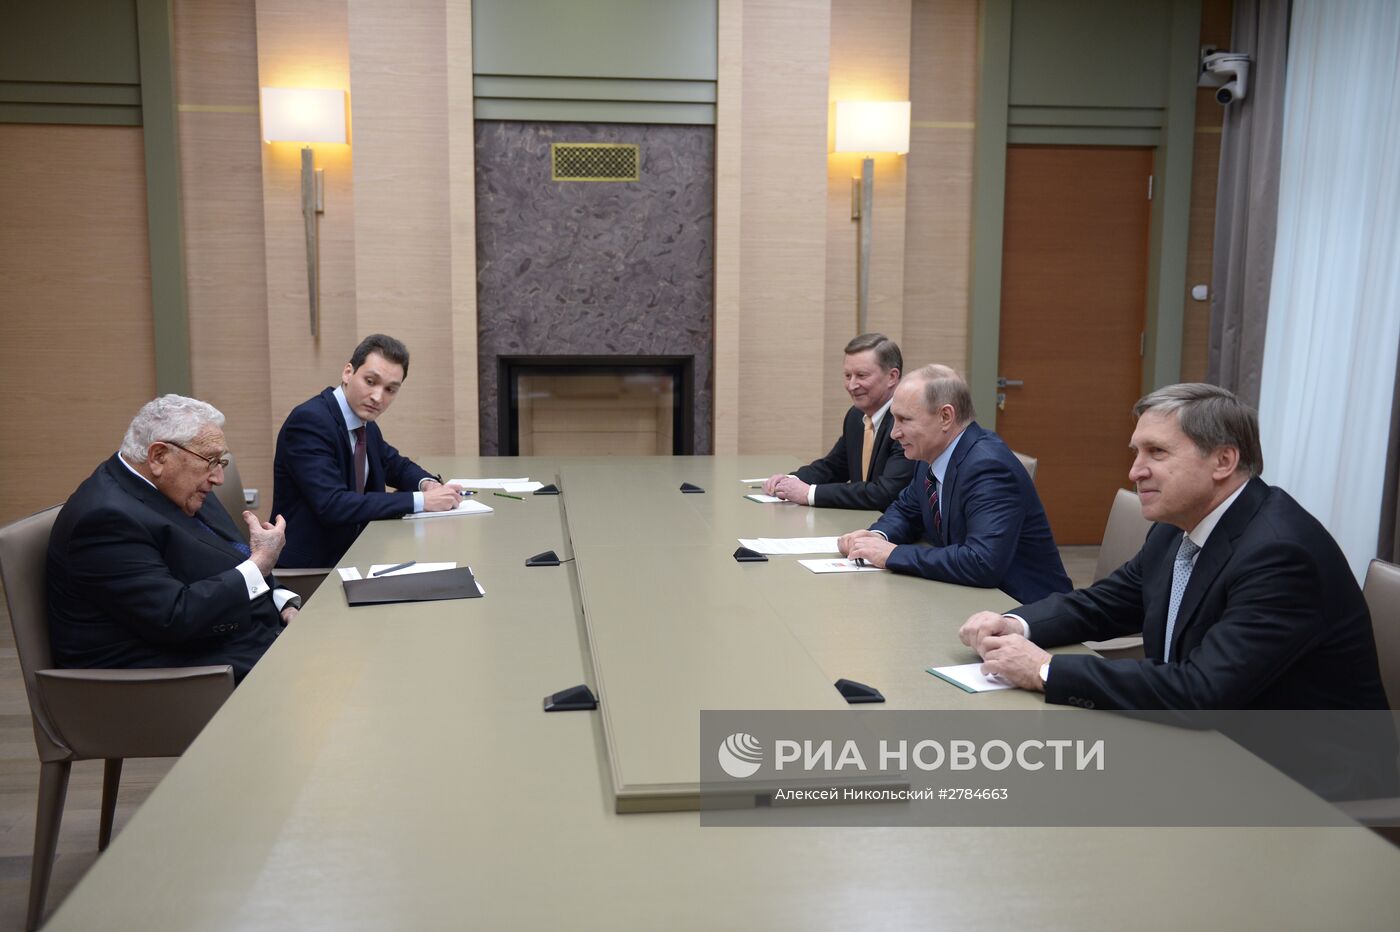 Президент РФ В. Путин встретился с экс-госсекретарем США Г. Киссинджером